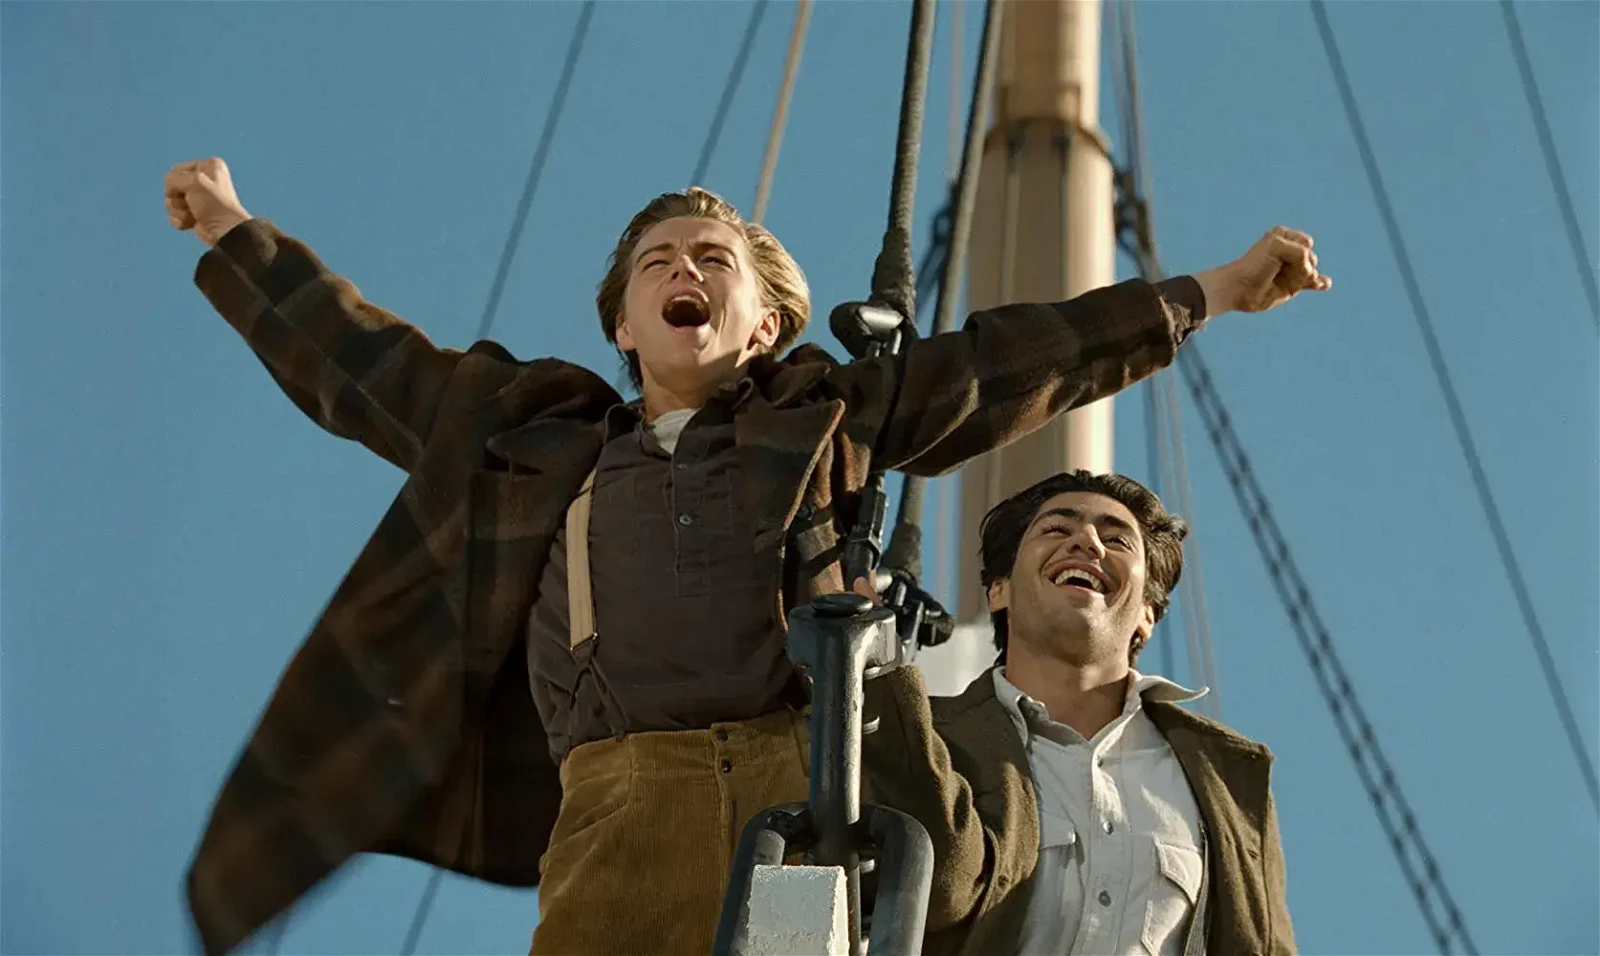 Leonardo DiCaprio in a scene from Titanic